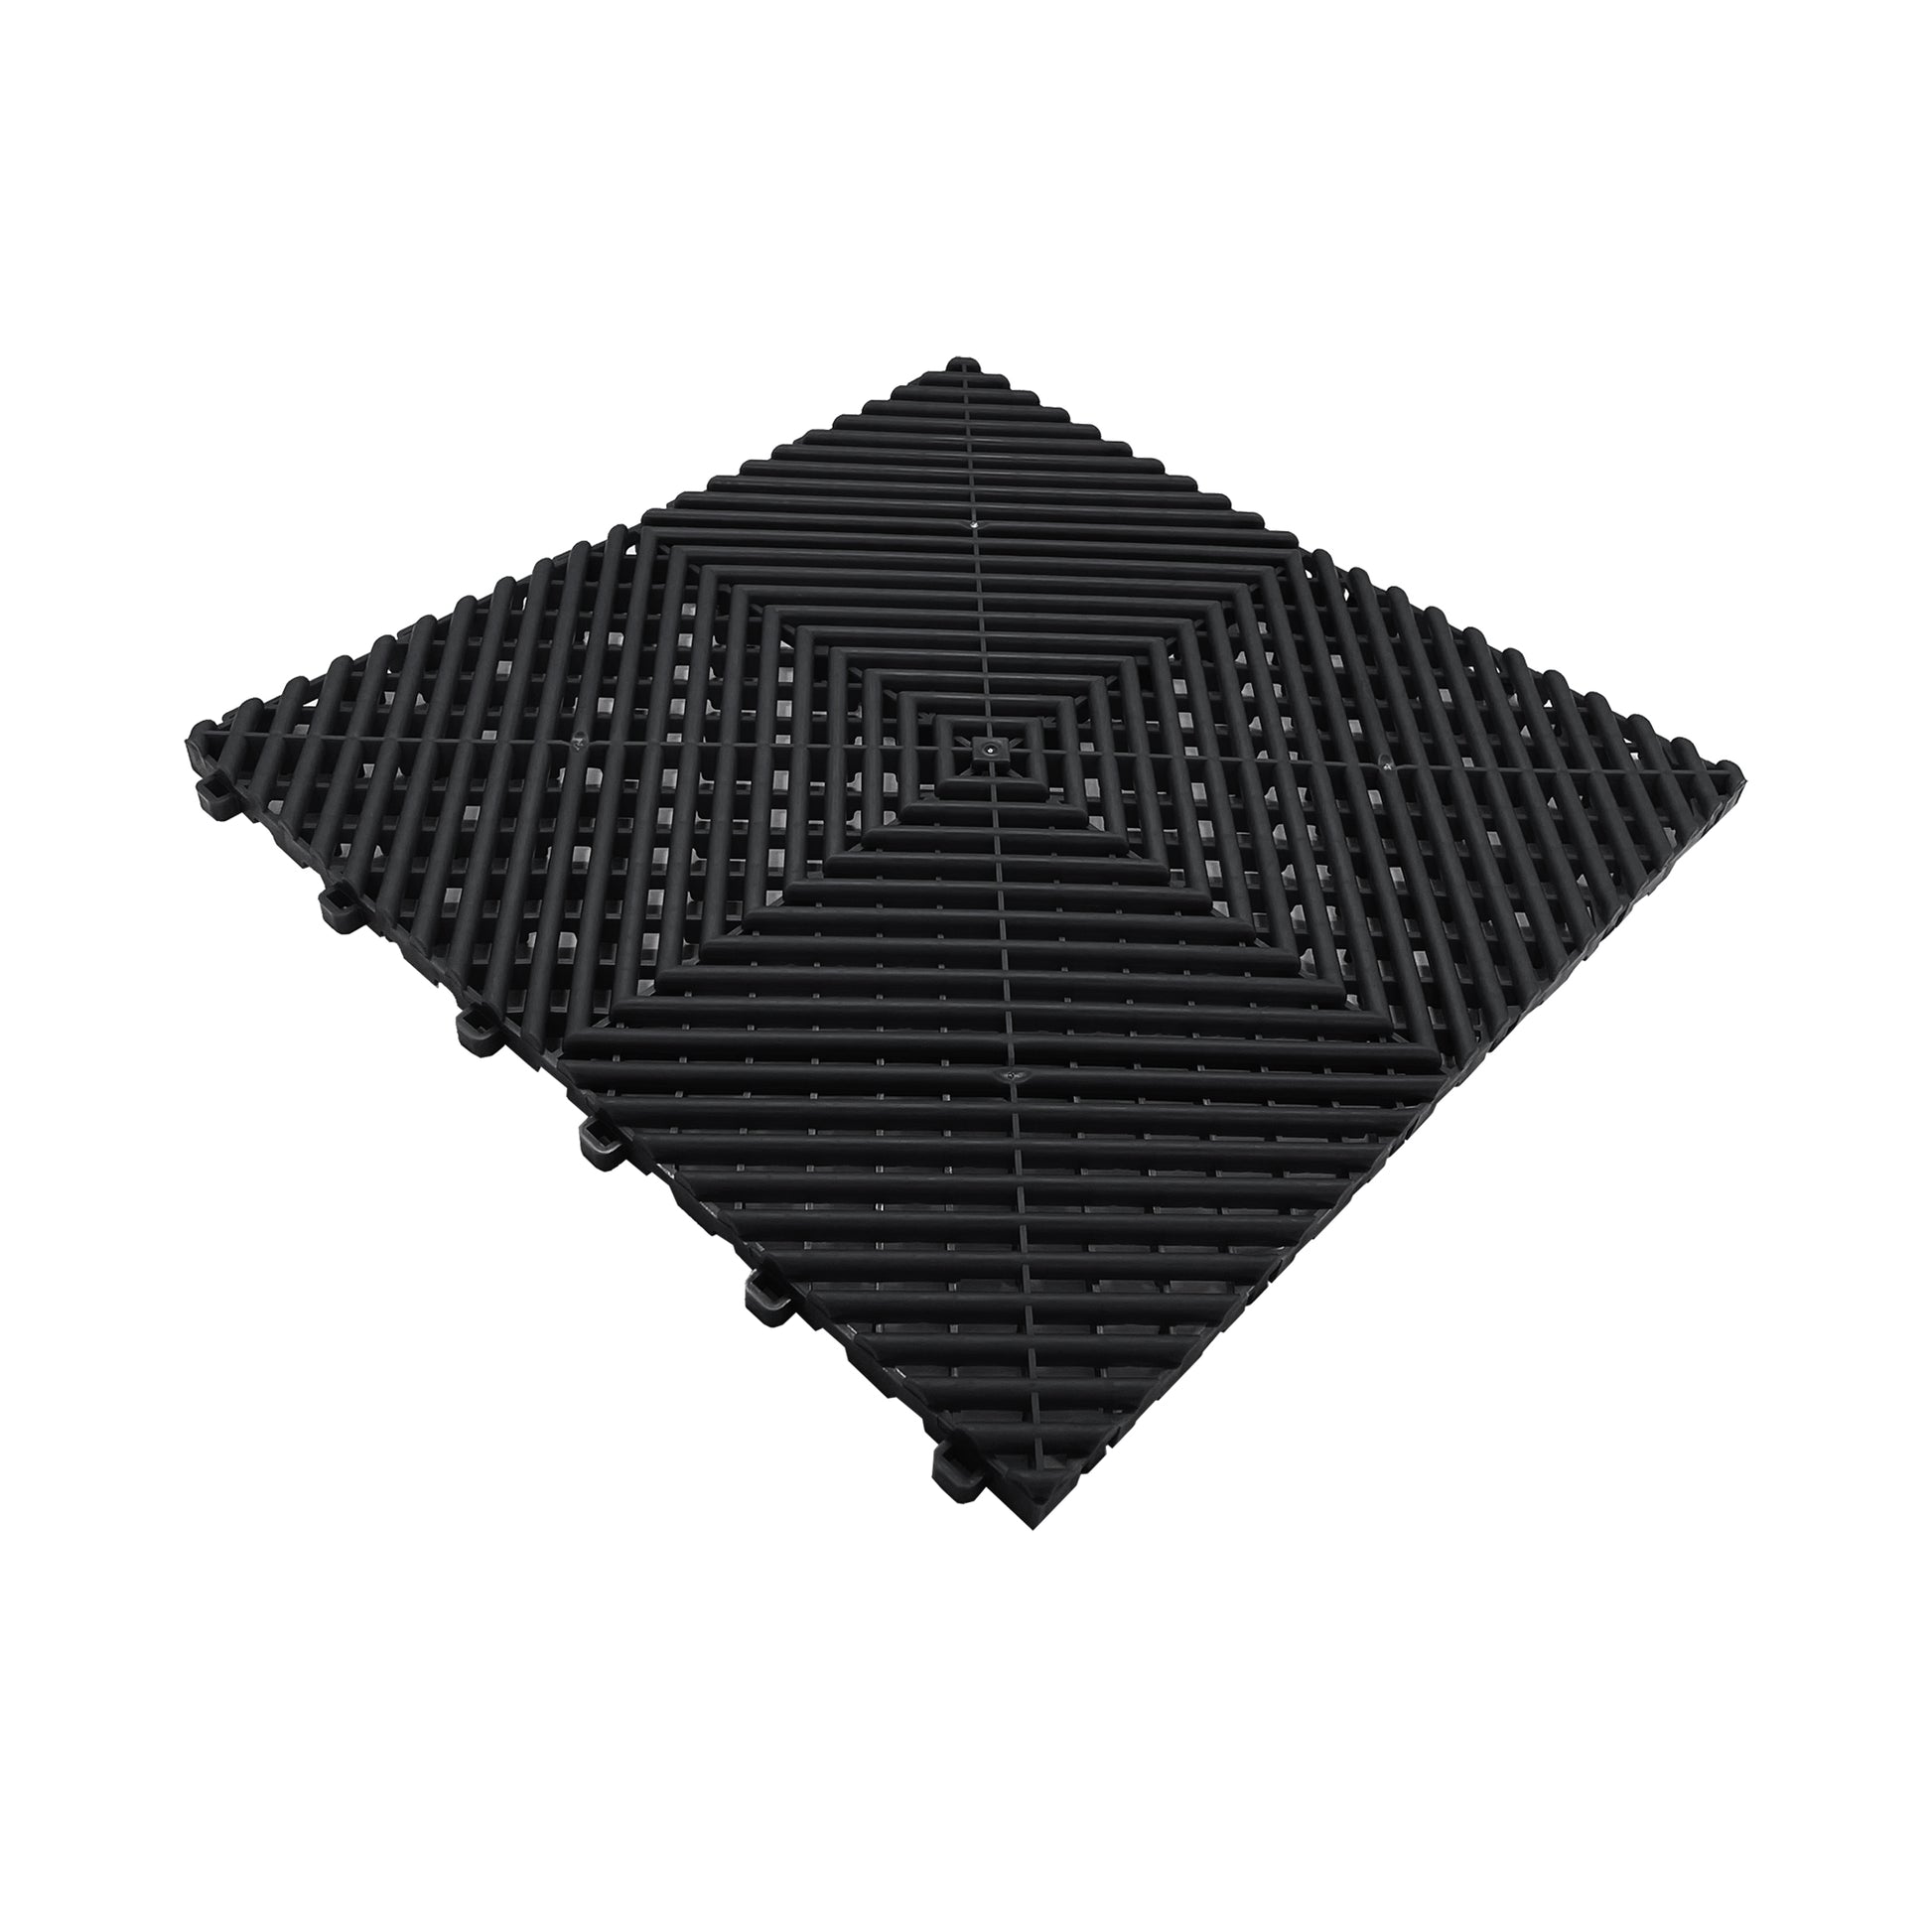 Nicoman Garage Floor Tile Similar to Swiss Trax